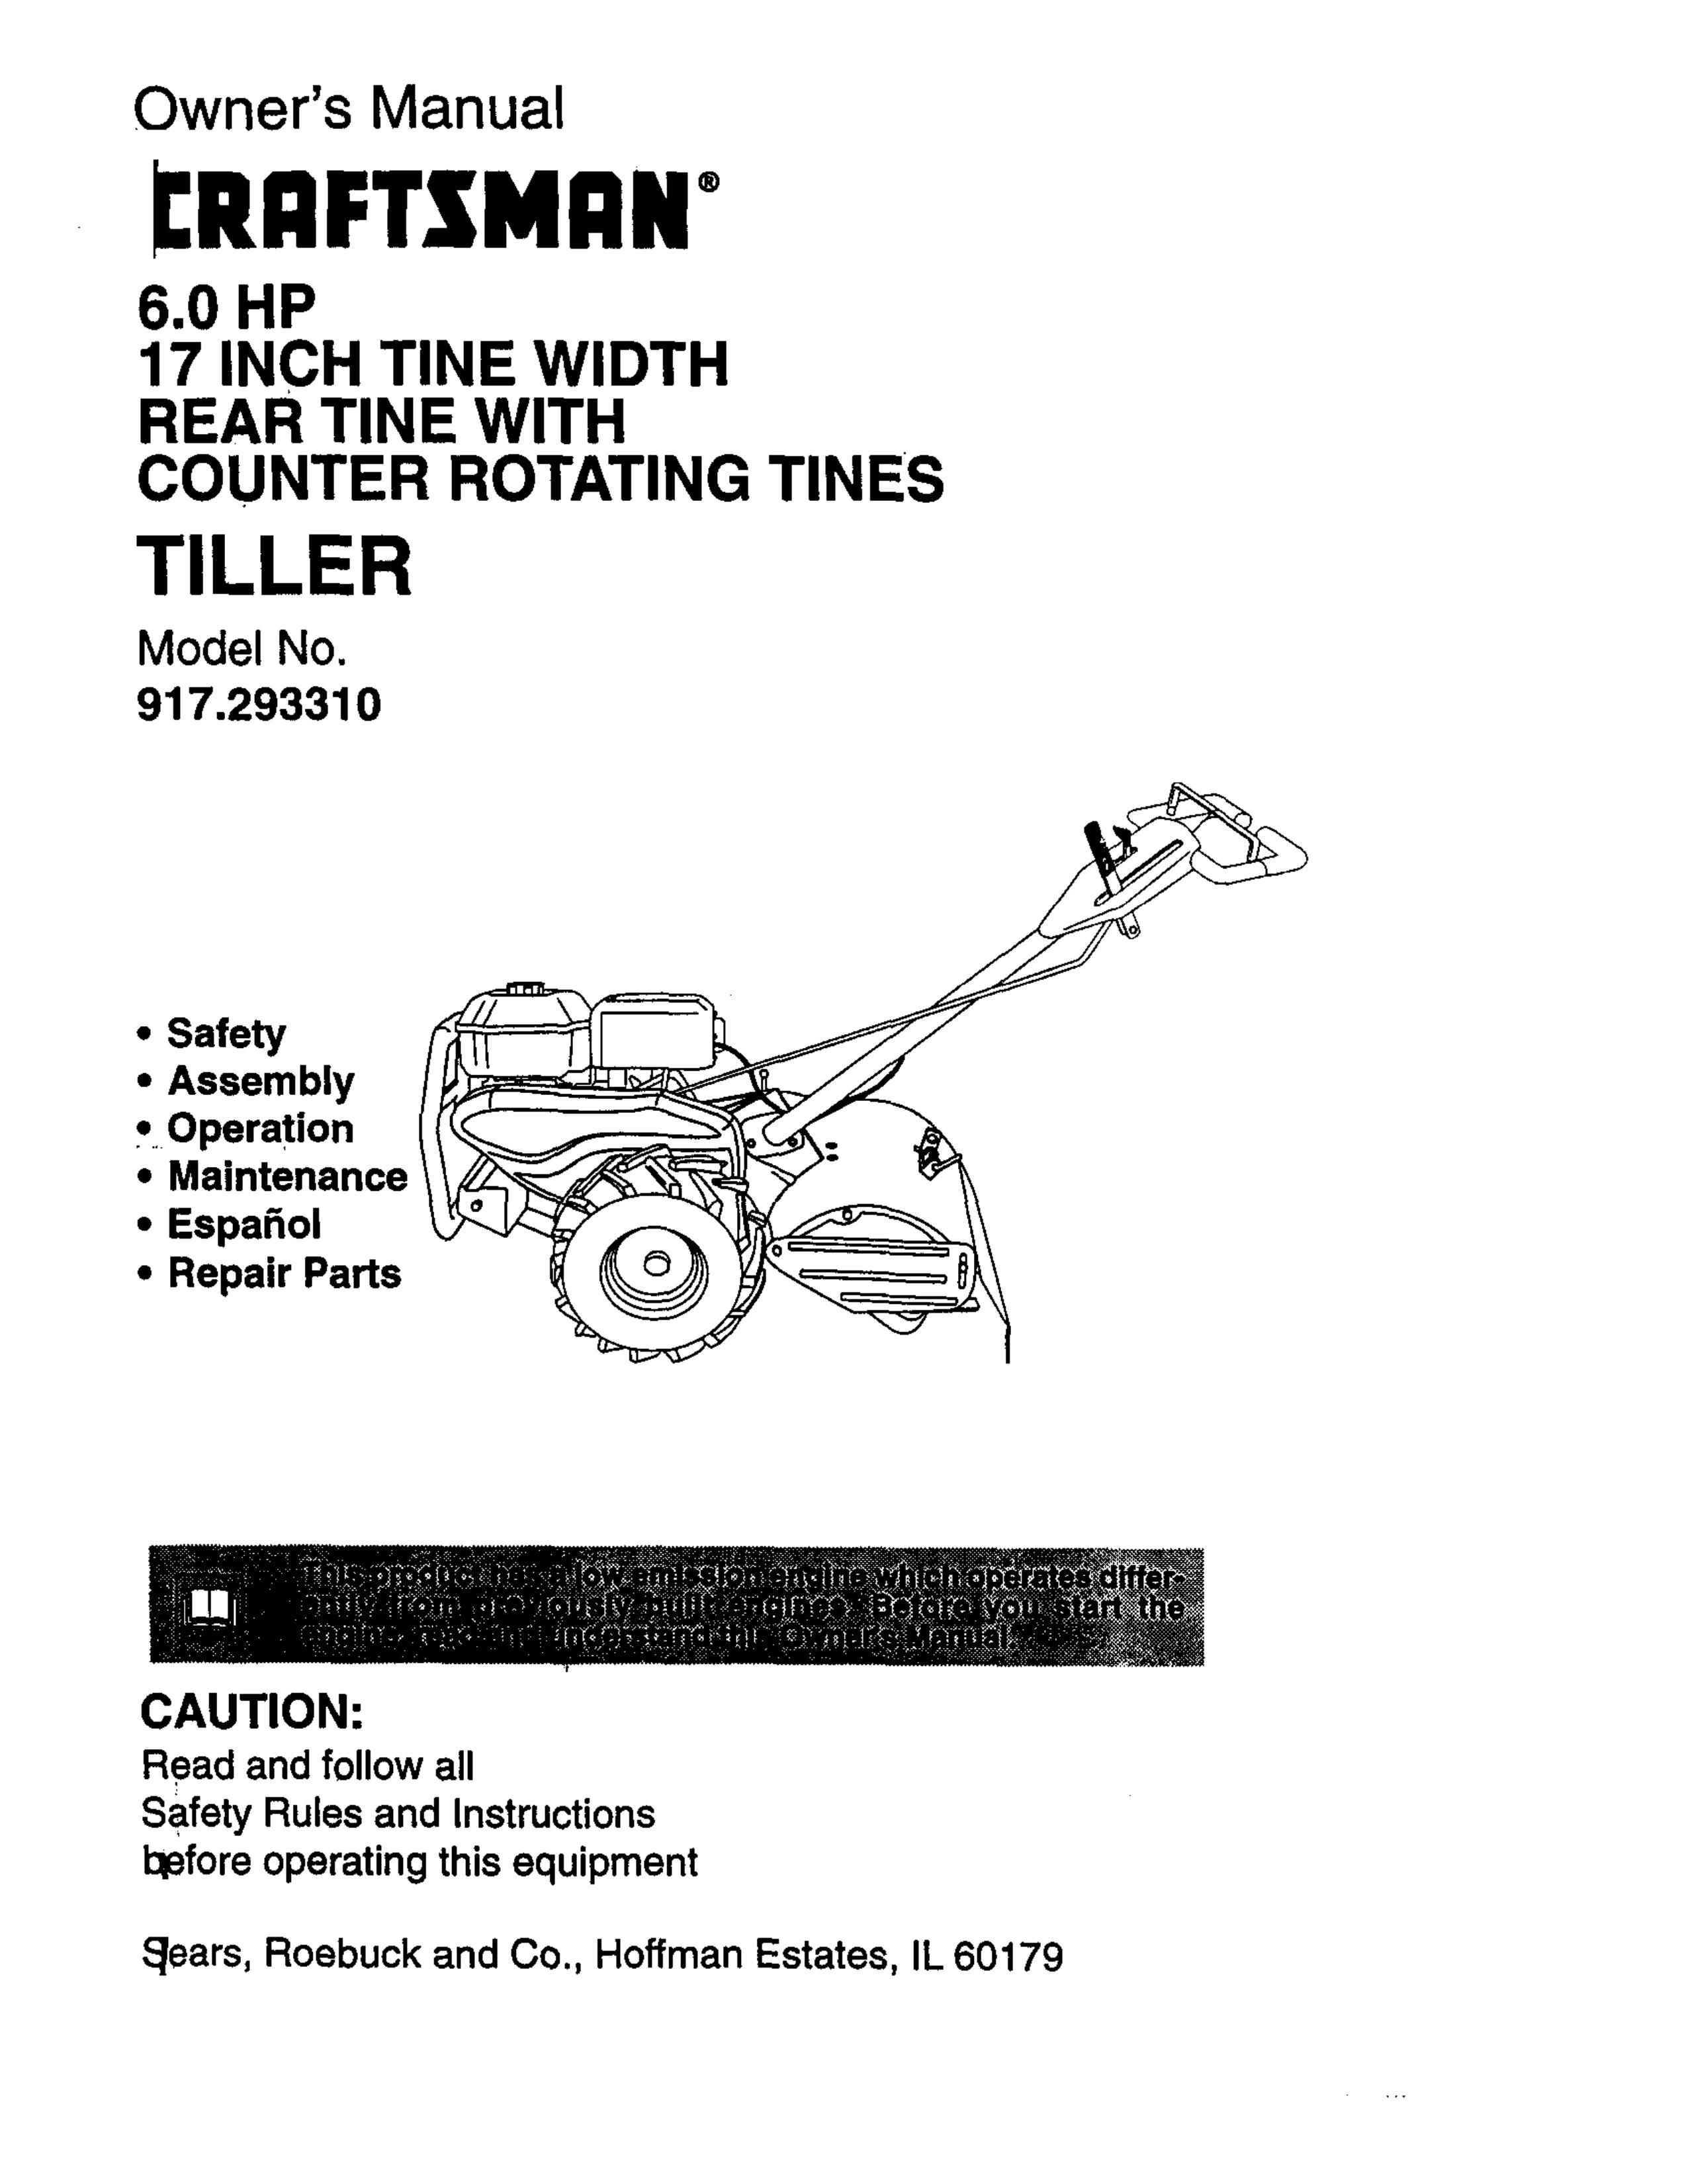 Craftsman 917.29331 Tiller User Manual